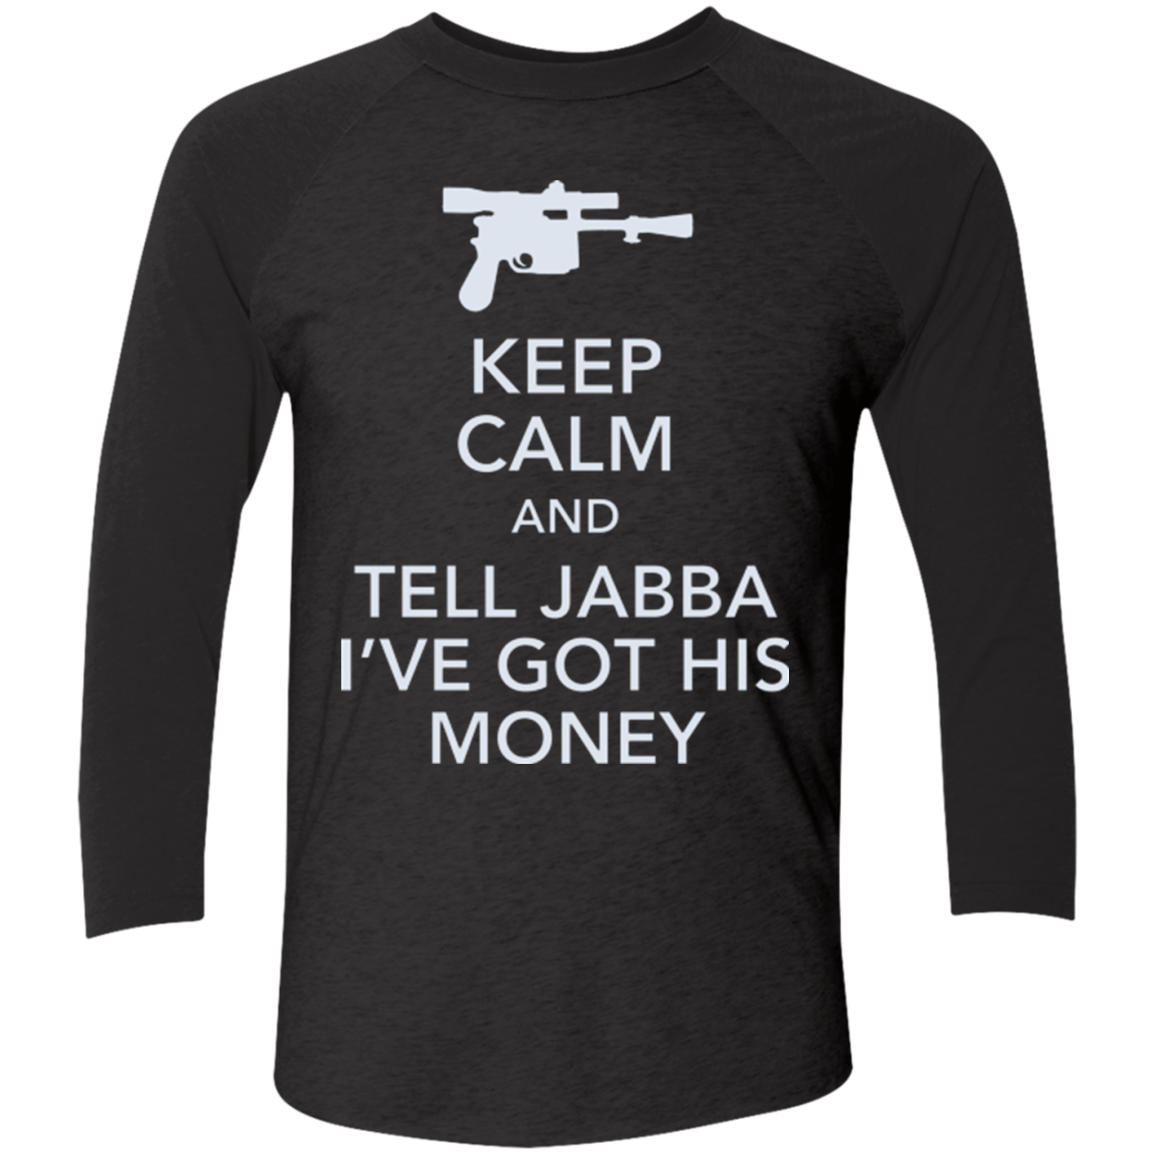 Tell Jabba (2) Men's Triblend 3/4 Sleeve